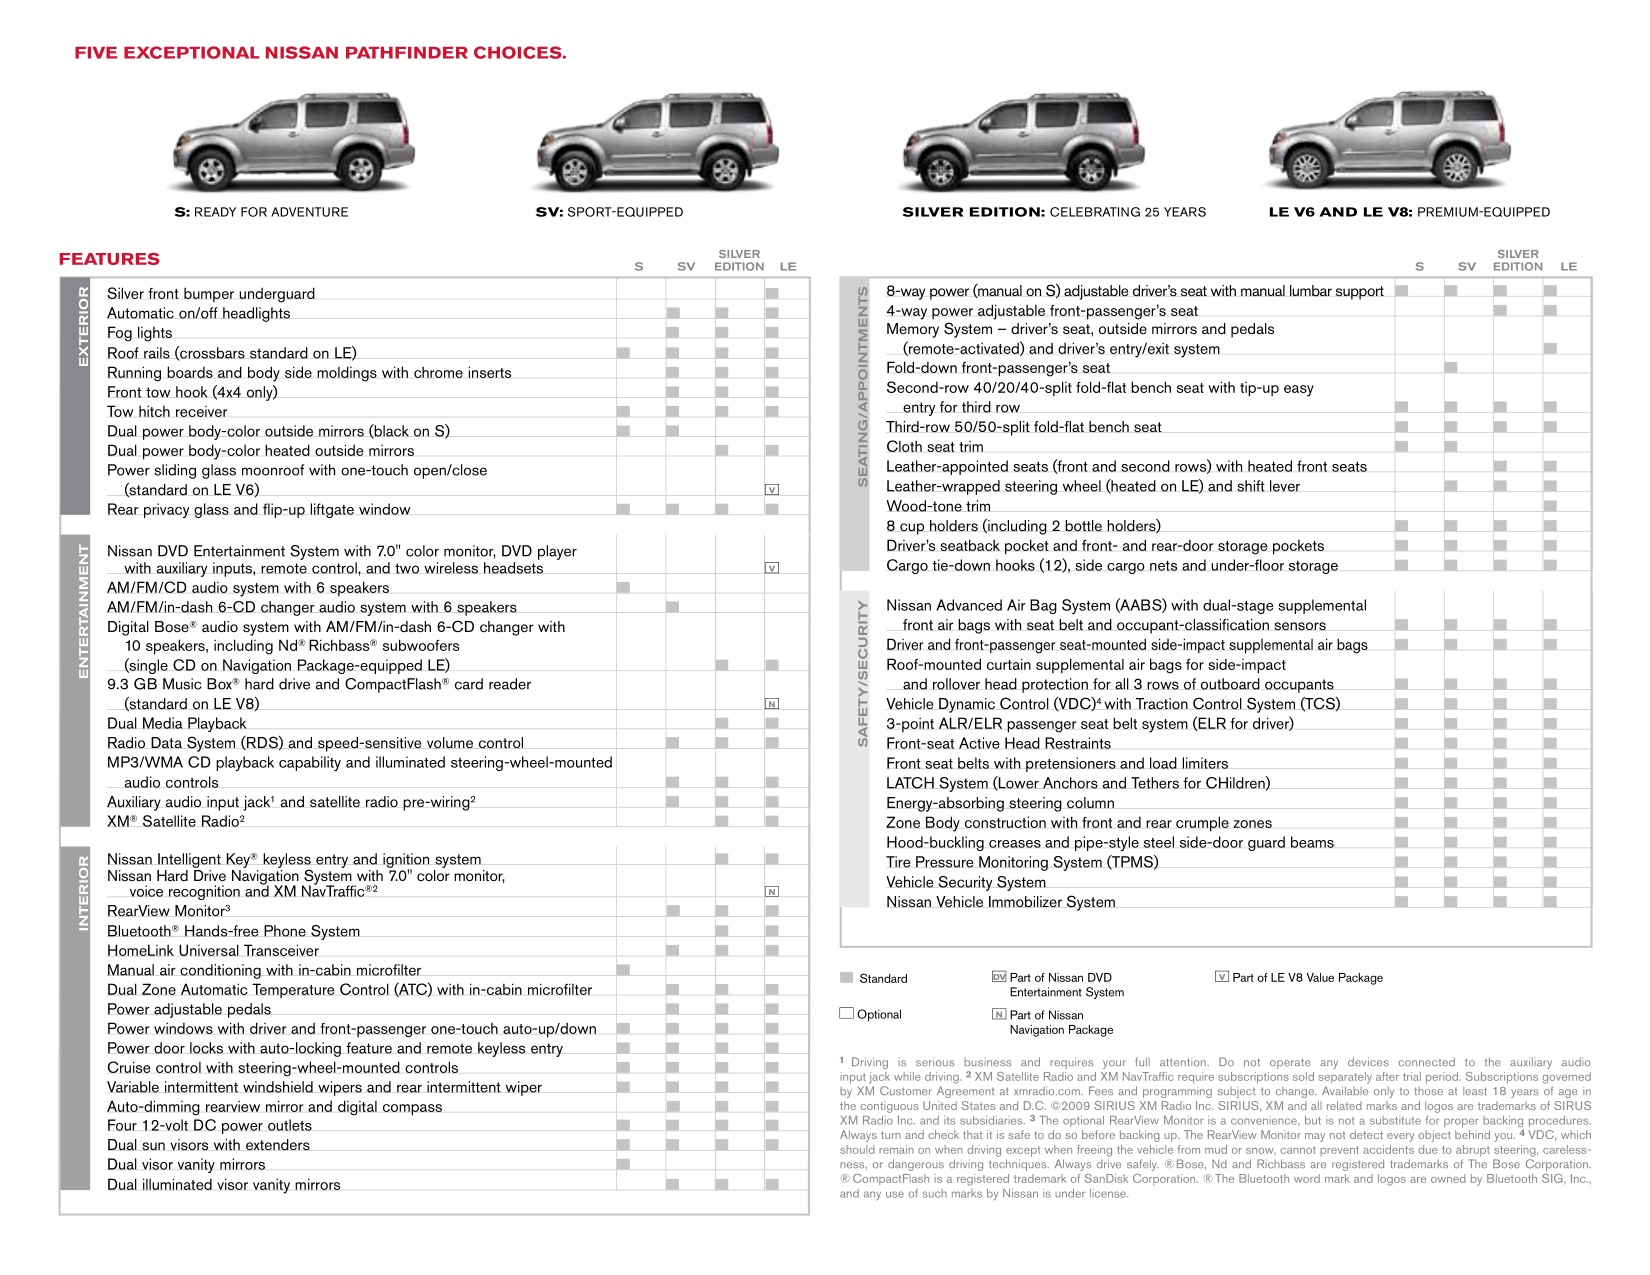 2011 Nissan Pathfinder Brochure Page 2